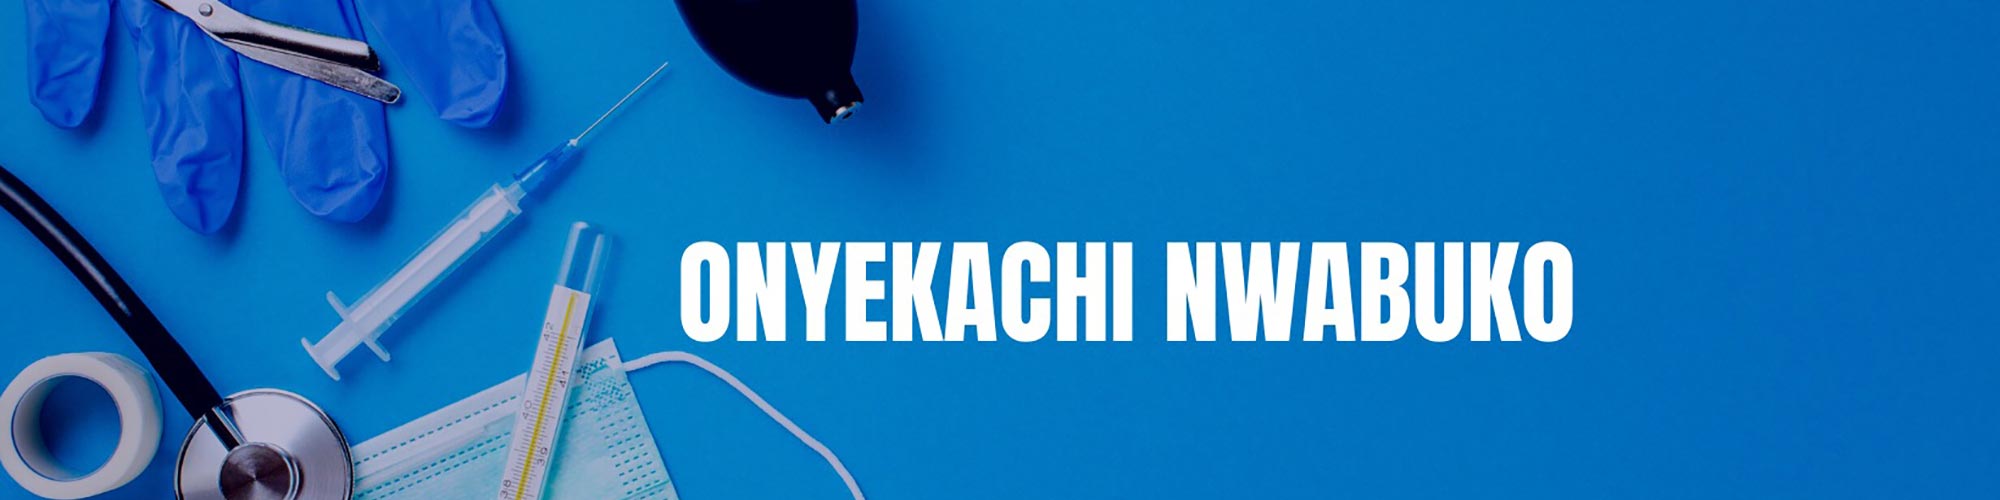 Onyekachi Nwabuko